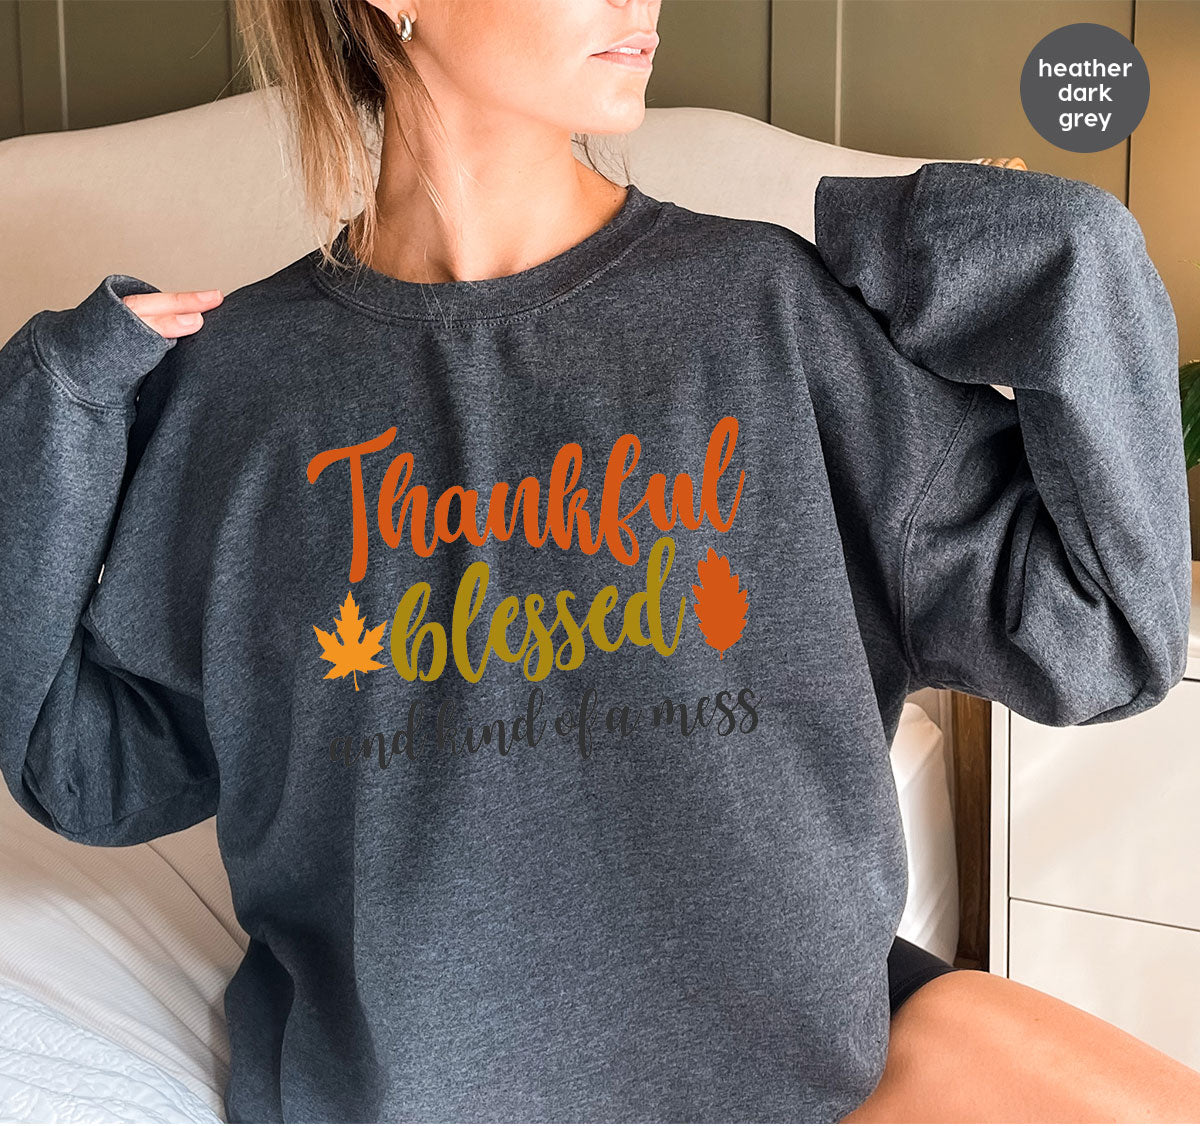 Thanksgiving Blessed Shirt, 2022 Thanksgiving T-Shirt, Thankful Blessed Shirt